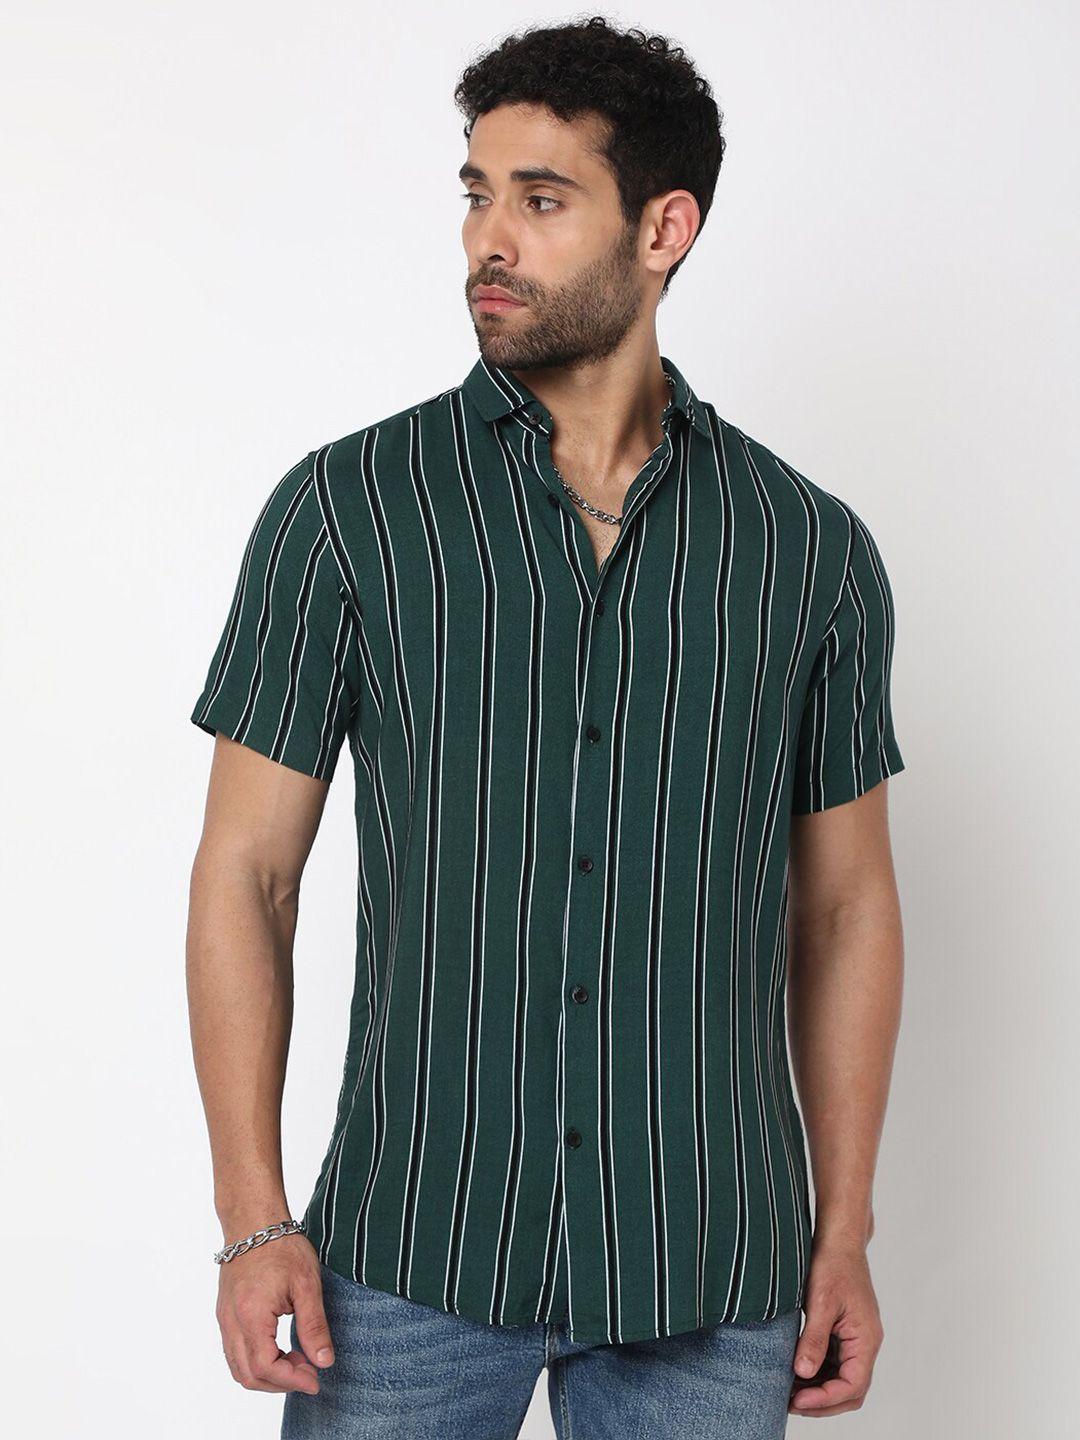 7shores classic striped casual shirt